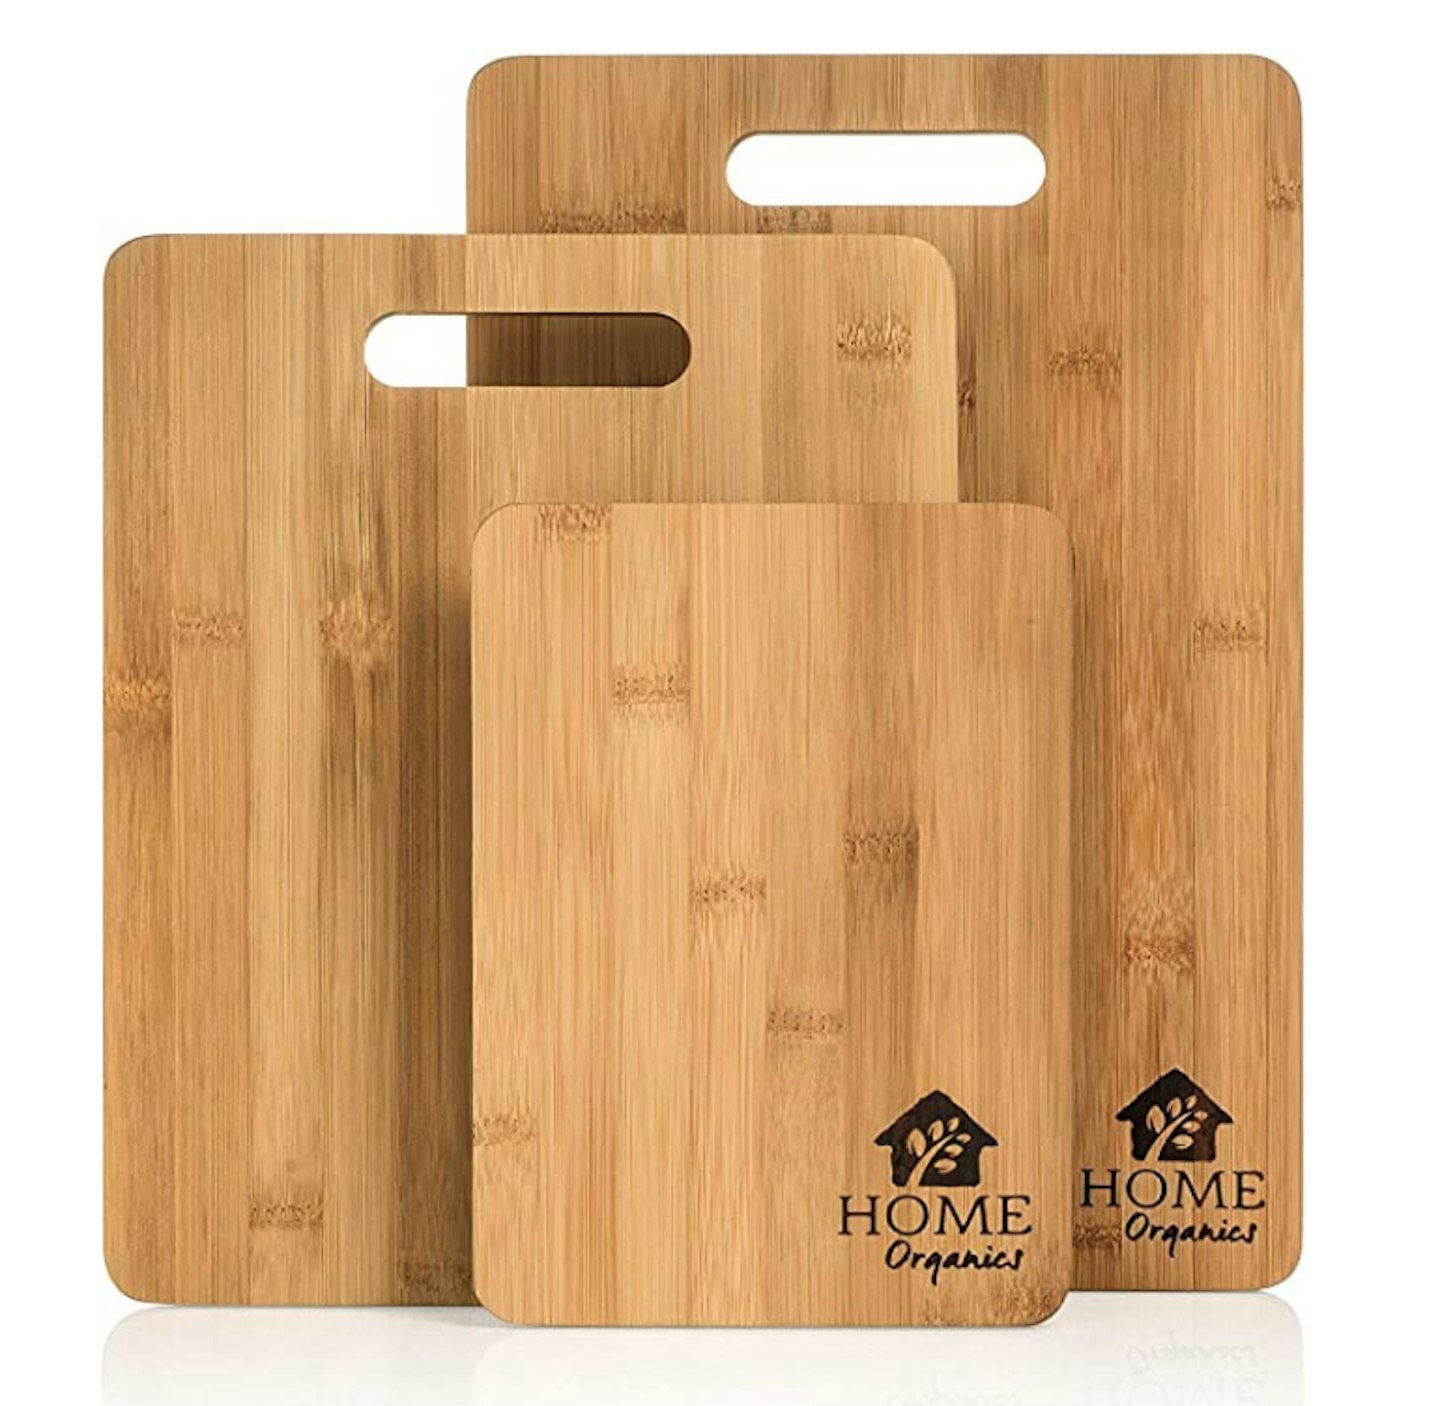 Home Organics Premium Organic Bamboo Chopping Board Set 